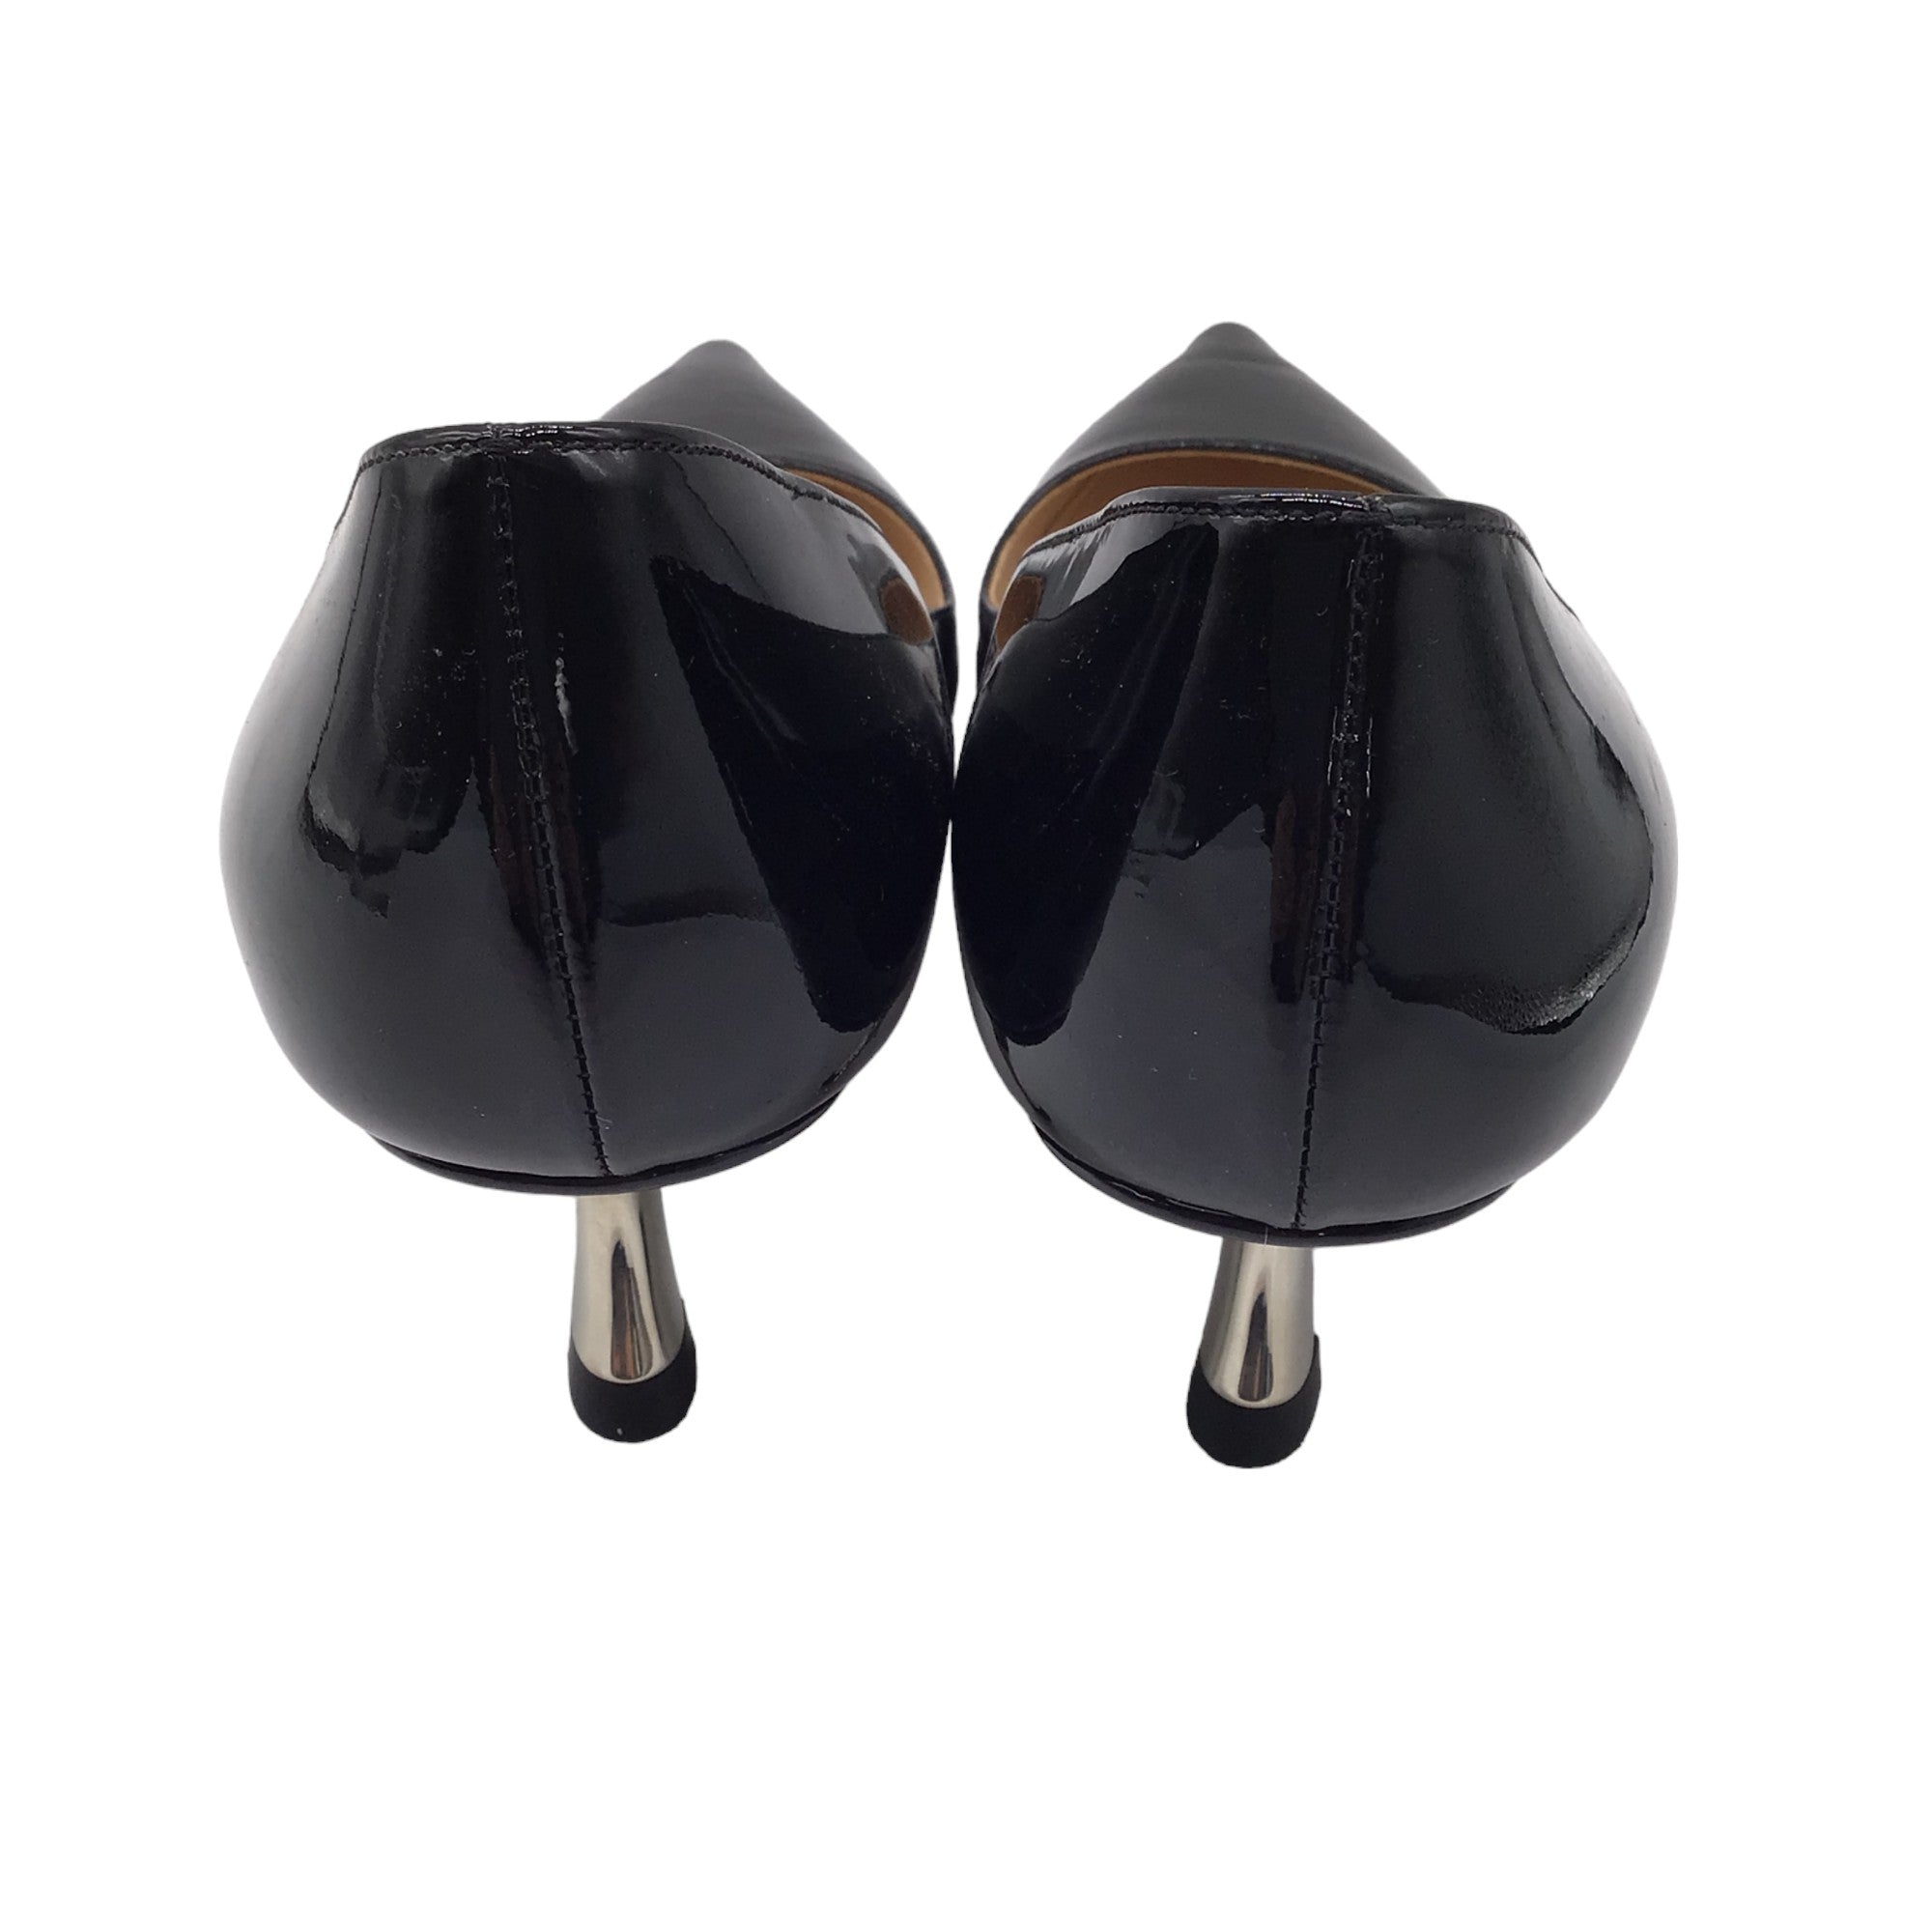 Prada Black Pointed Toe Patent Leather Pumps